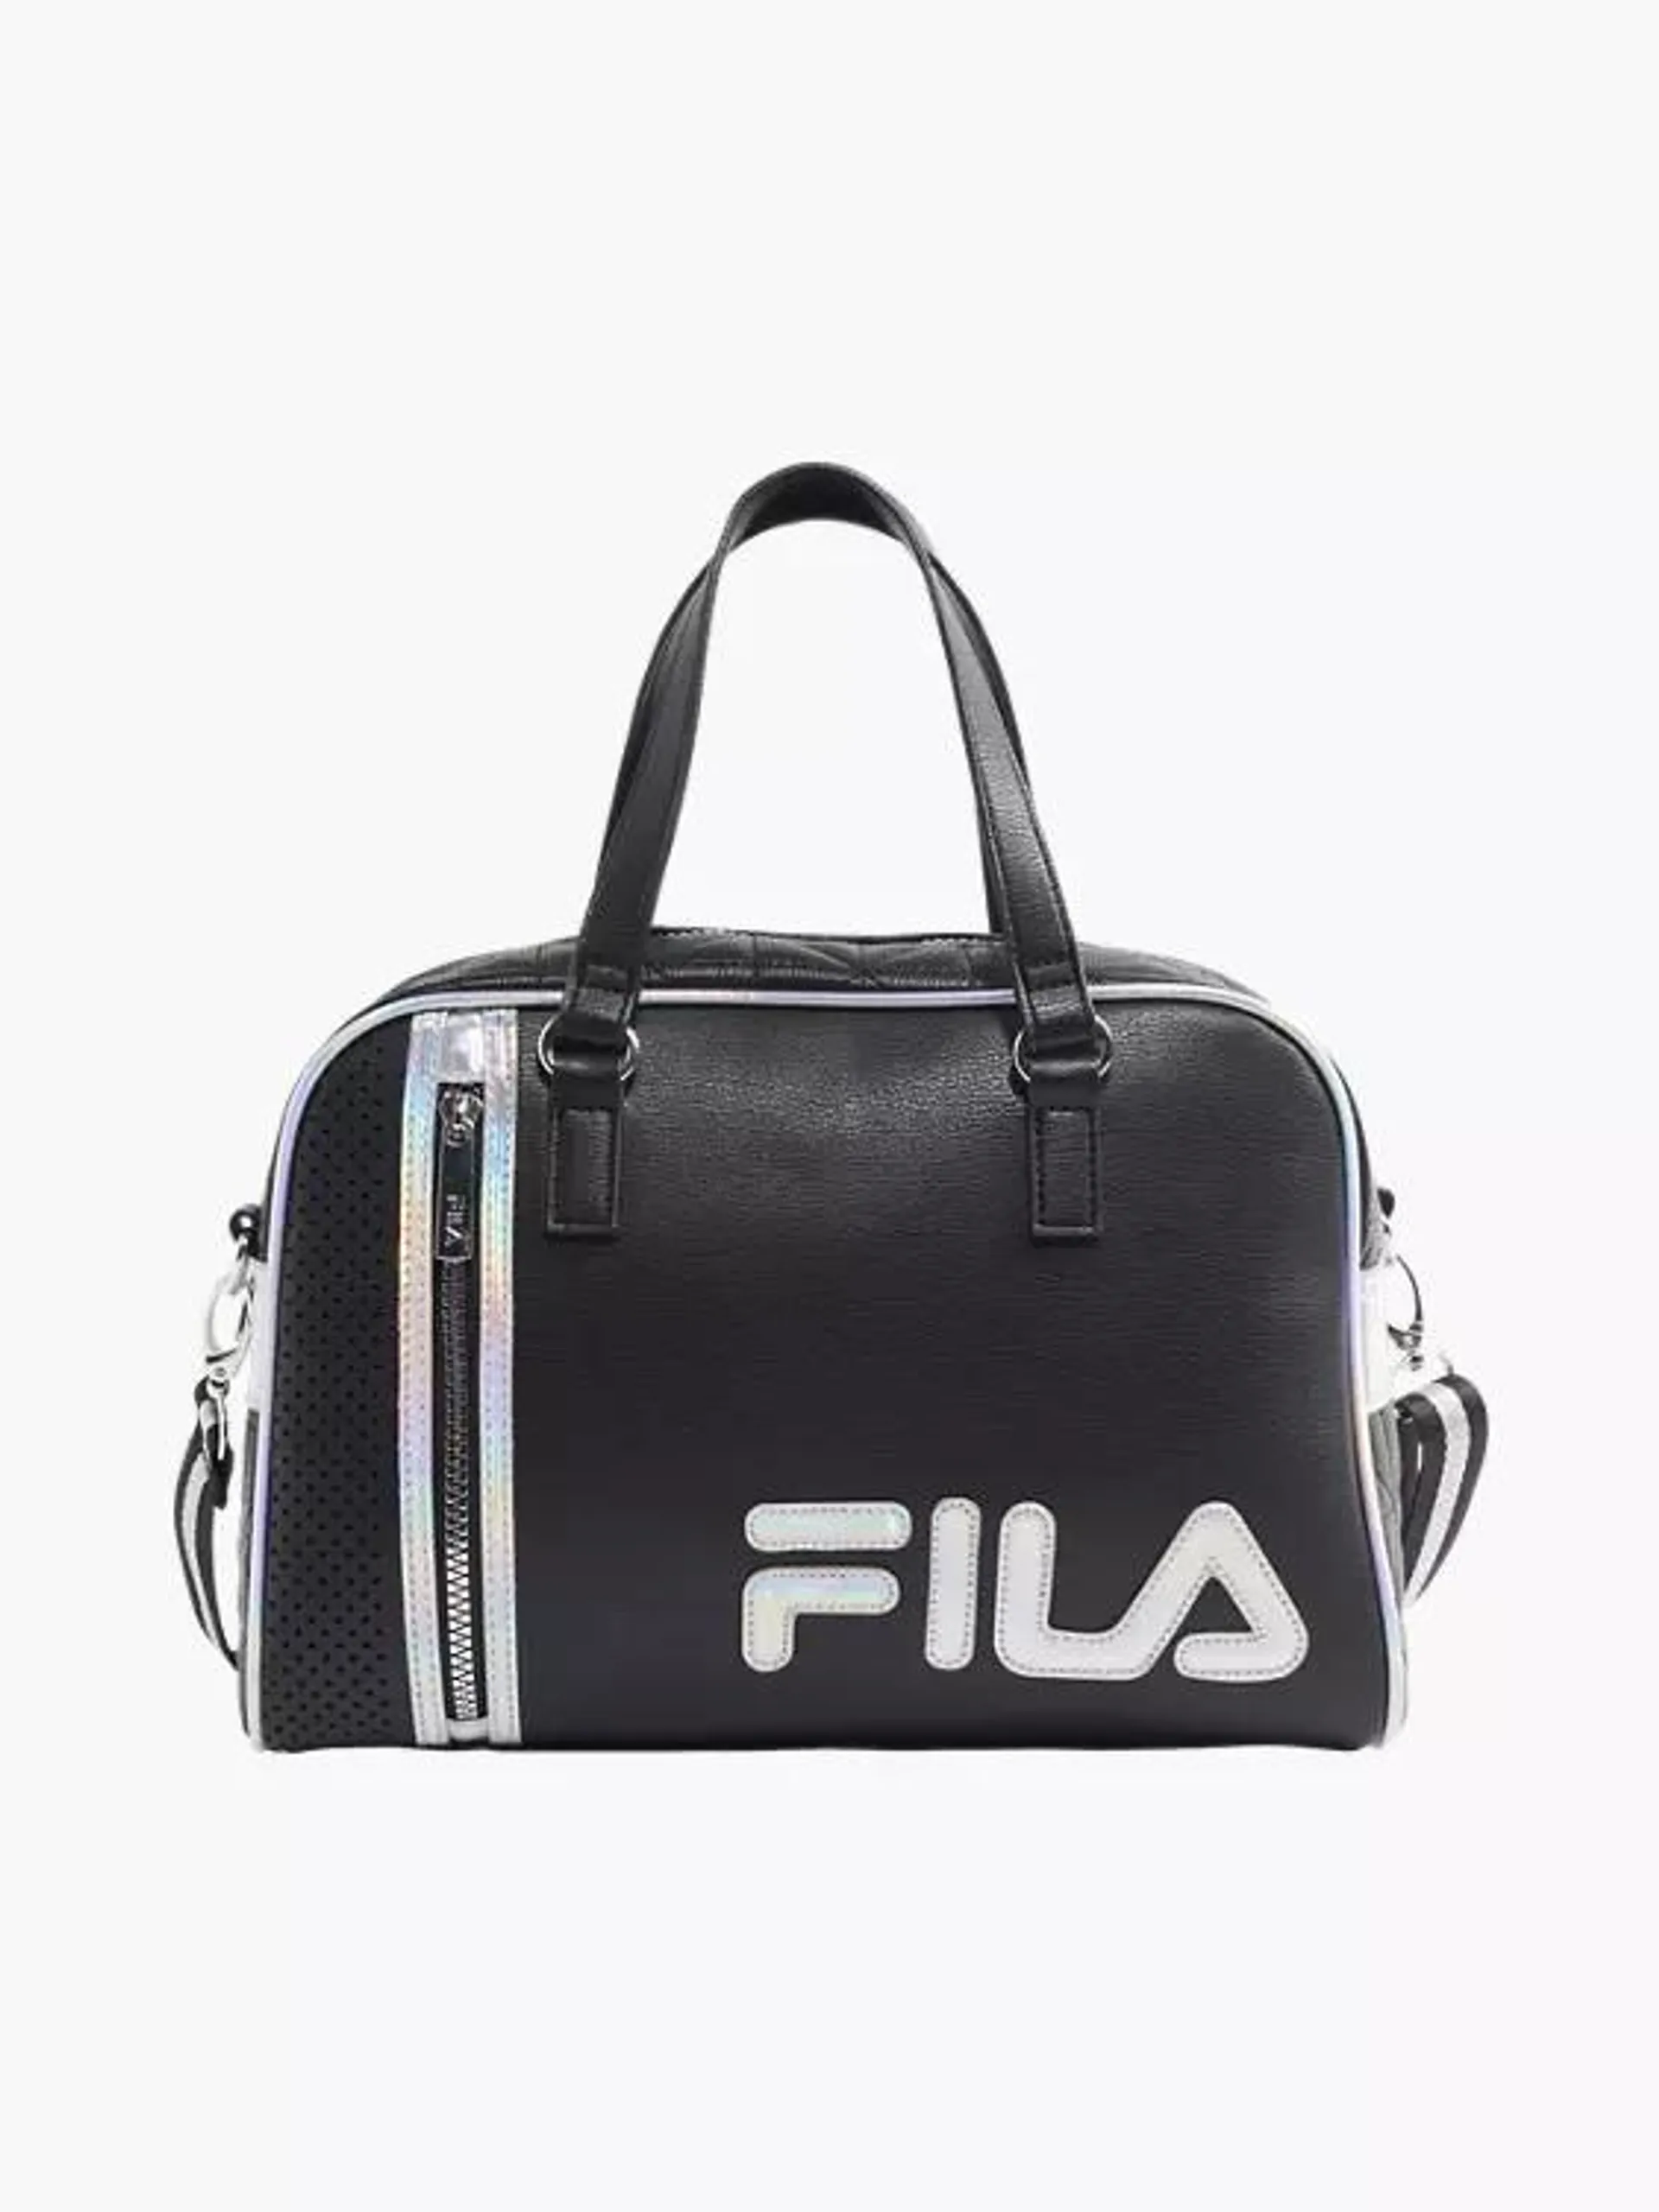 Black and White Fila Bag